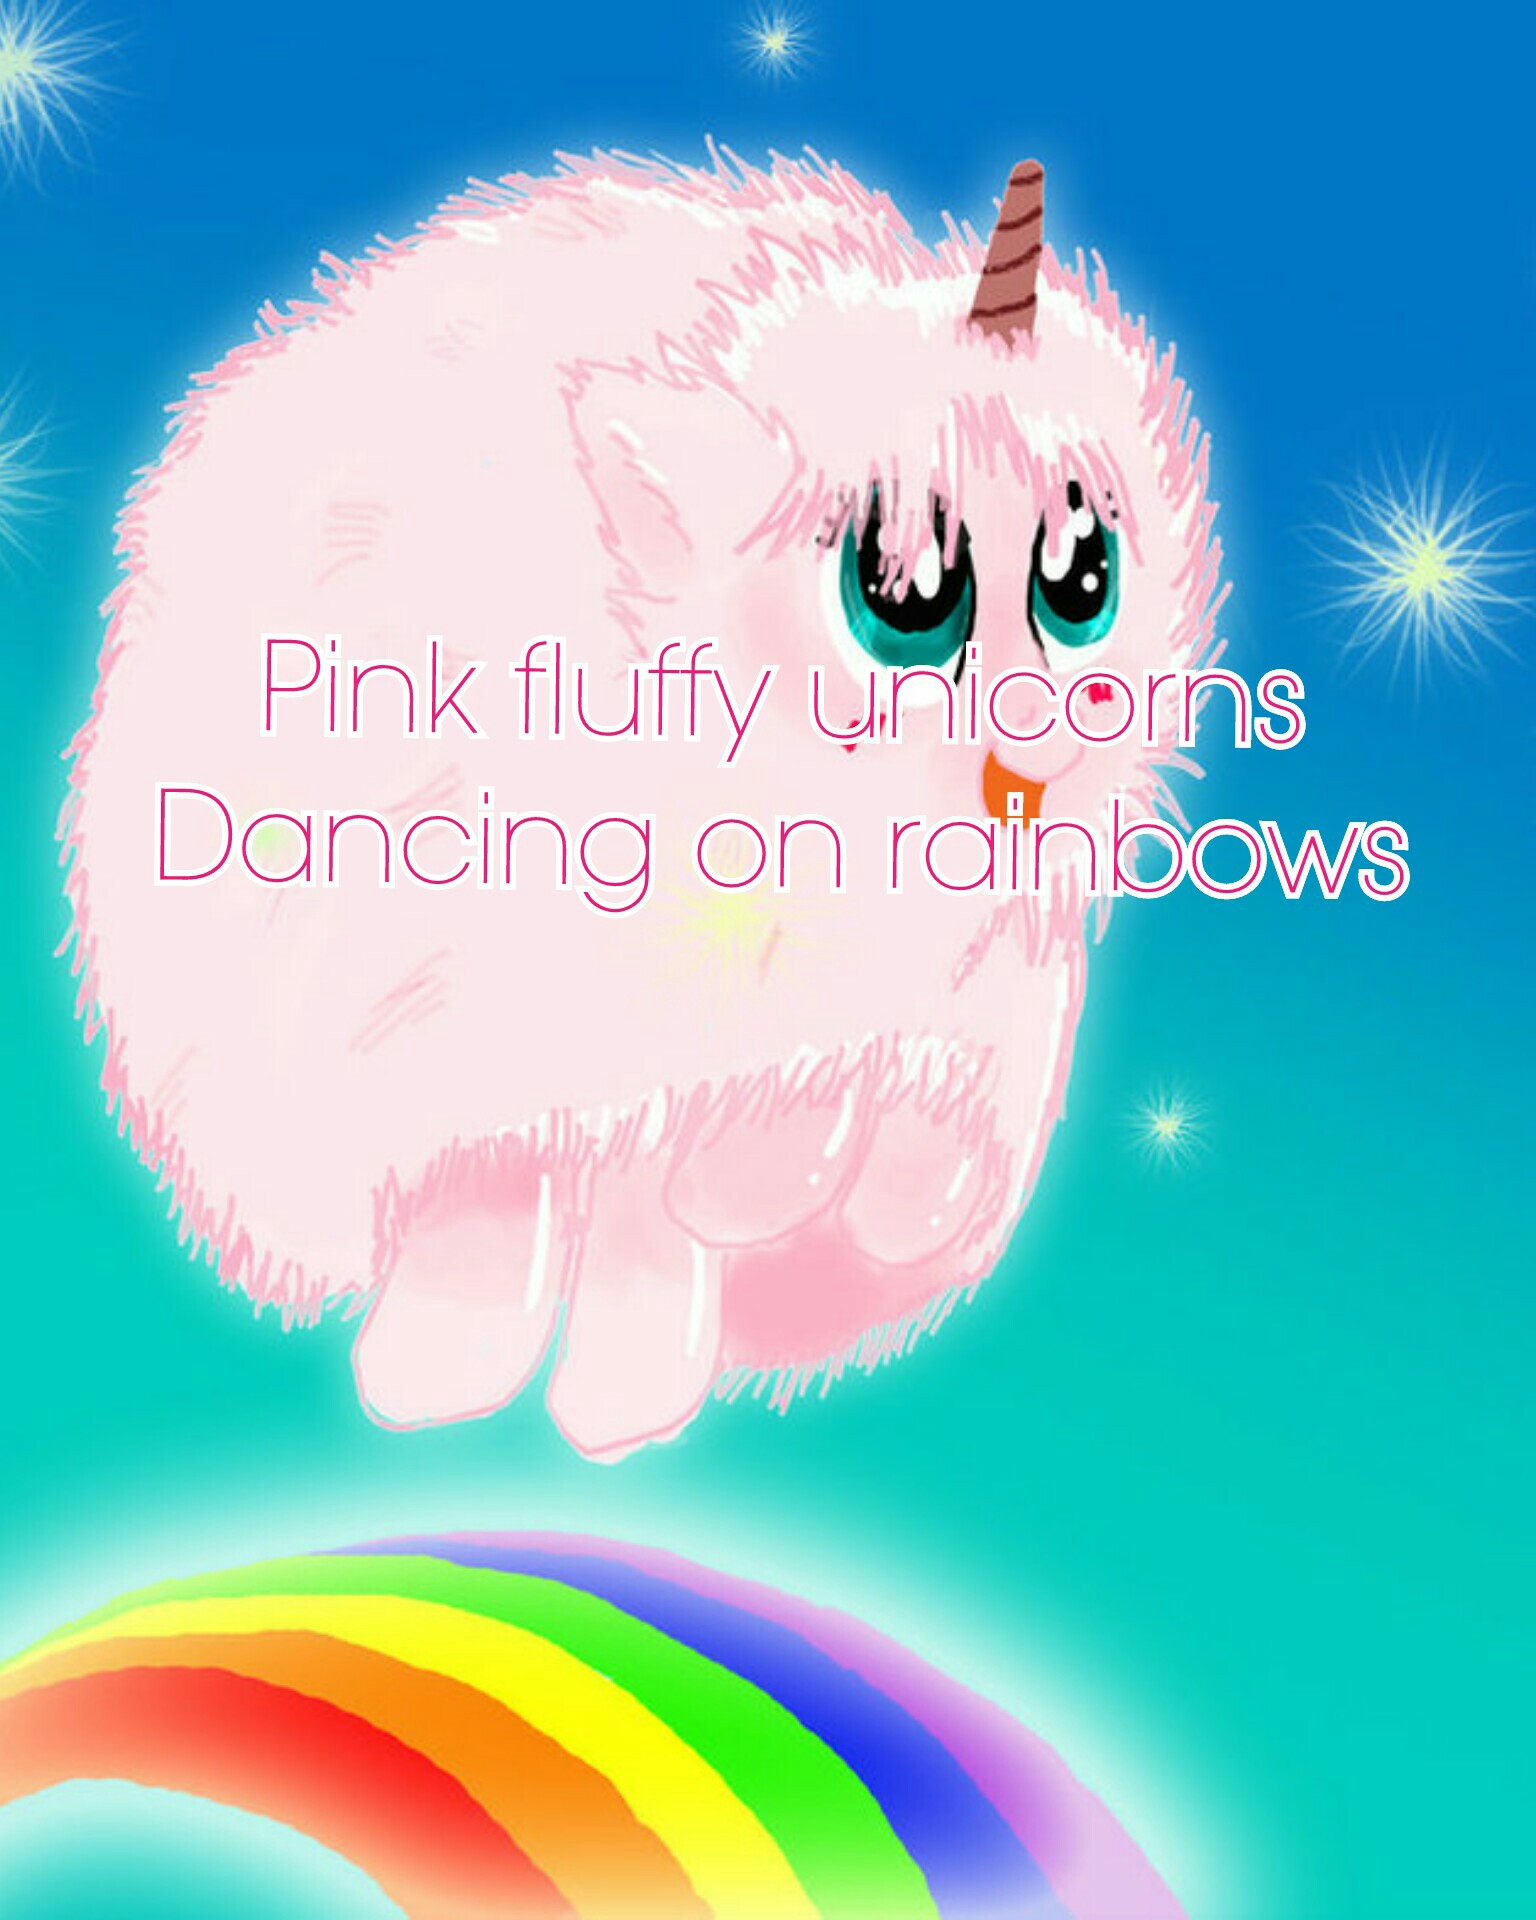 Pink fluffy unicorns
Dancing on rainbows